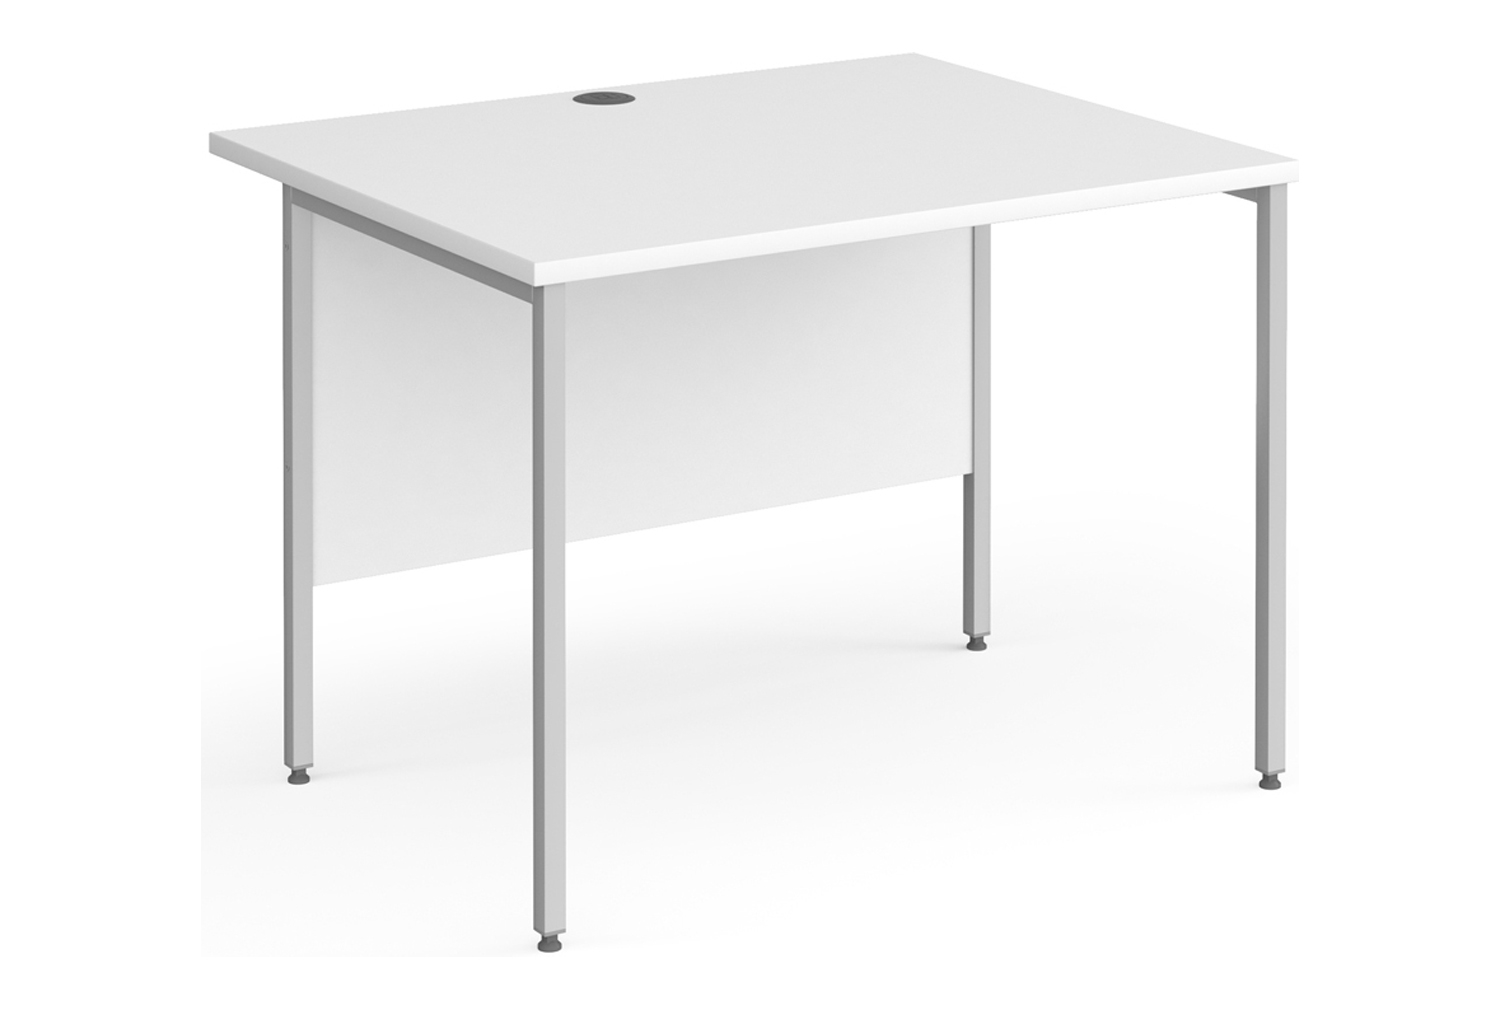 Value Line Classic+ Rectangular H-Leg Office Desk (Silver Leg), 100wx80dx73h (cm), White, Express Delivery